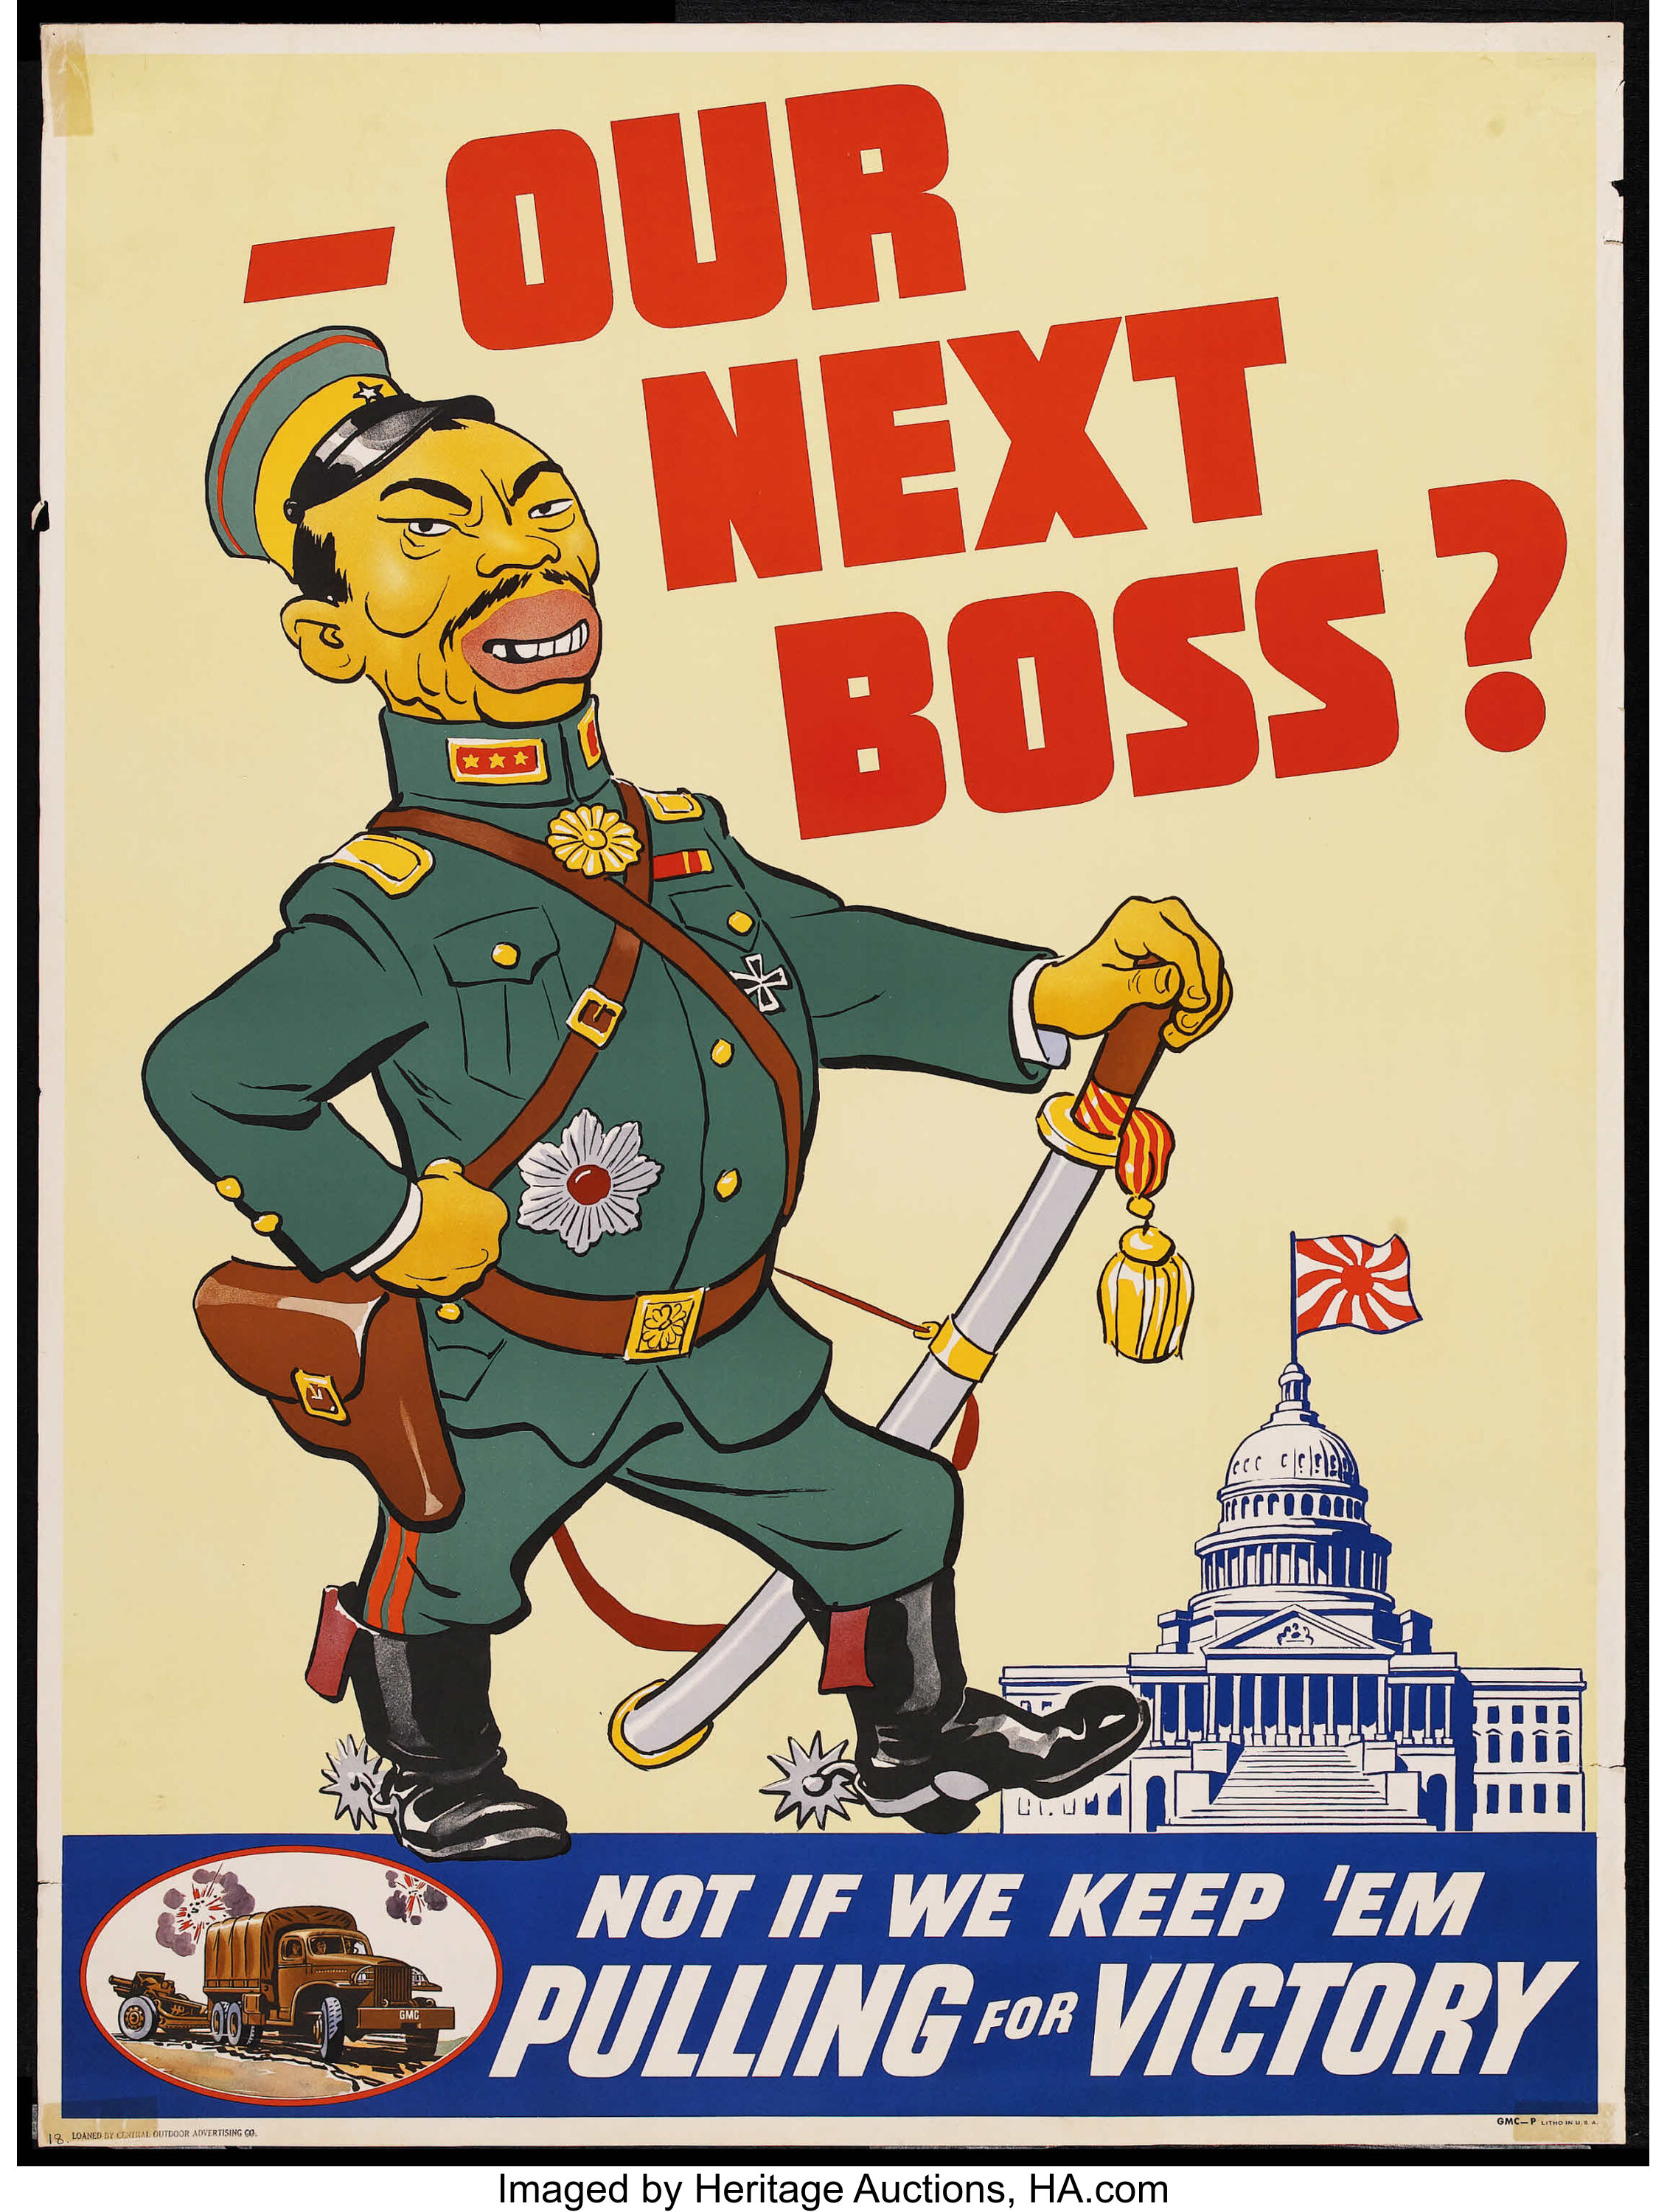 propaganda posters of ww2